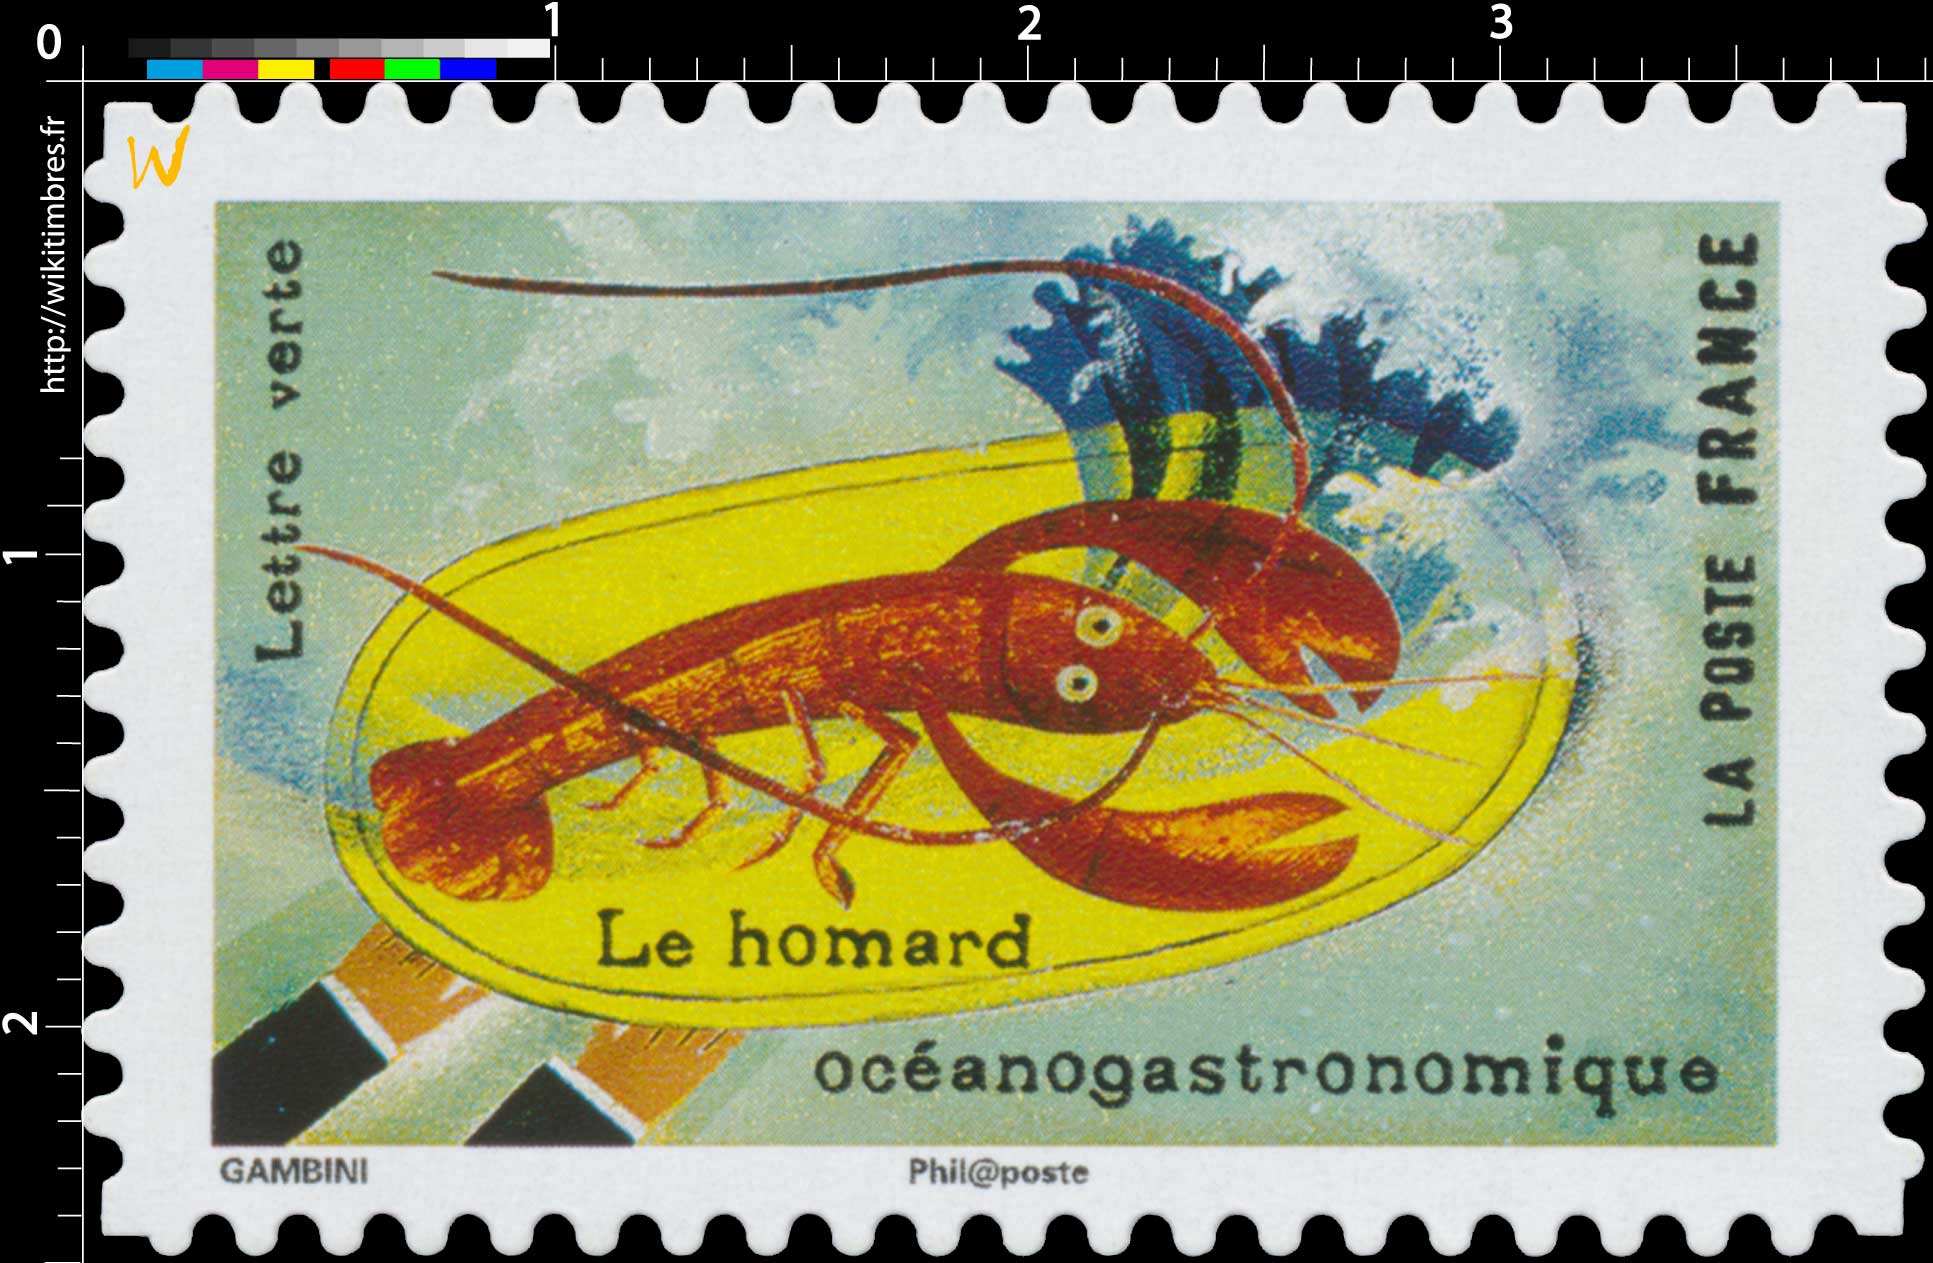 2017 Le homard océanogastronimique